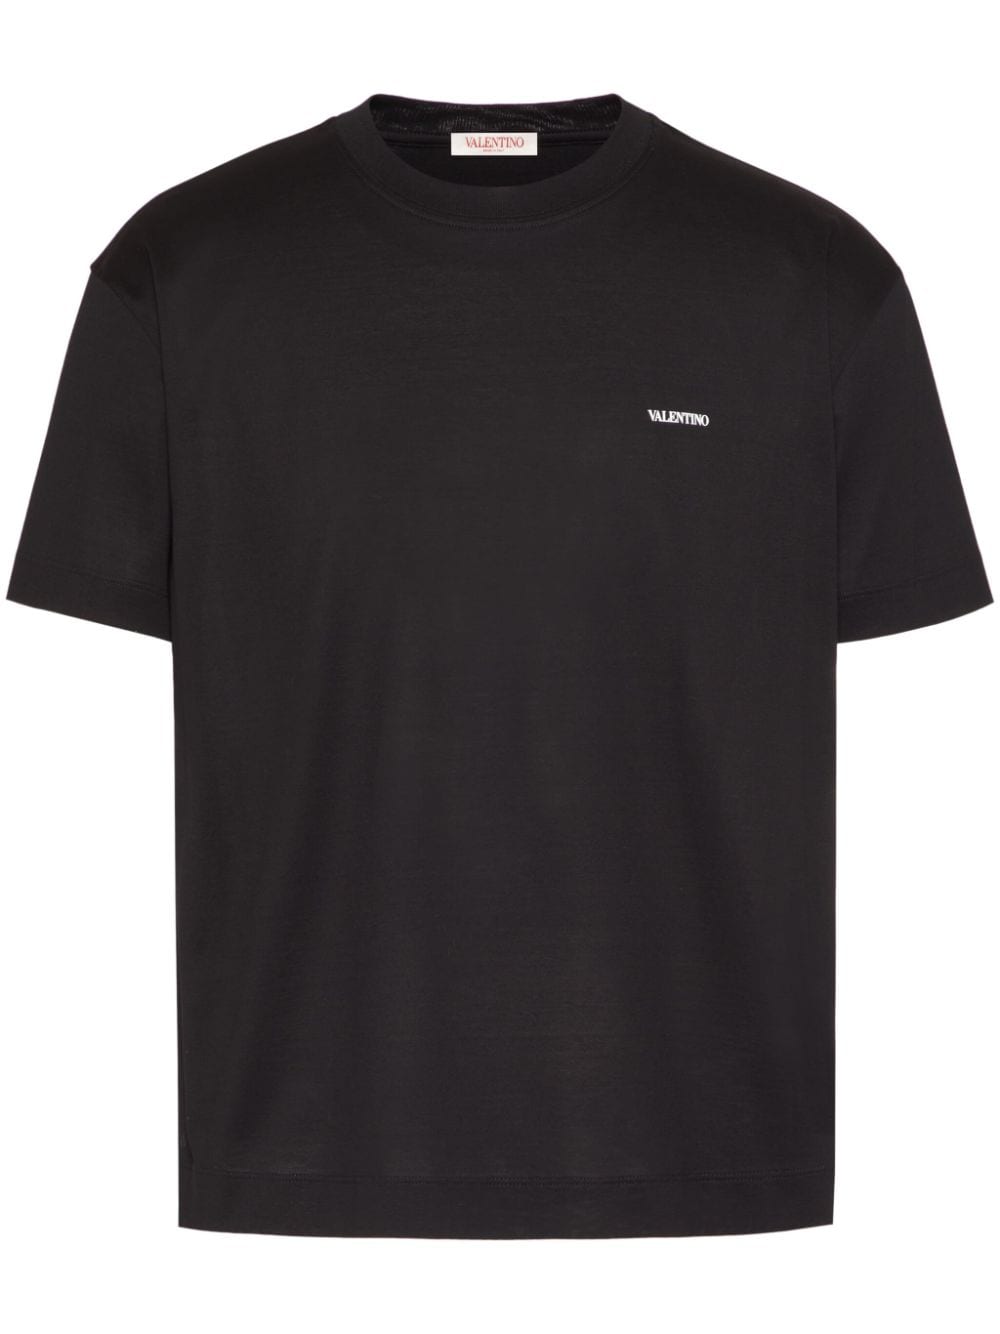 T-shirt in cotone con stampa logo<br><br><br>